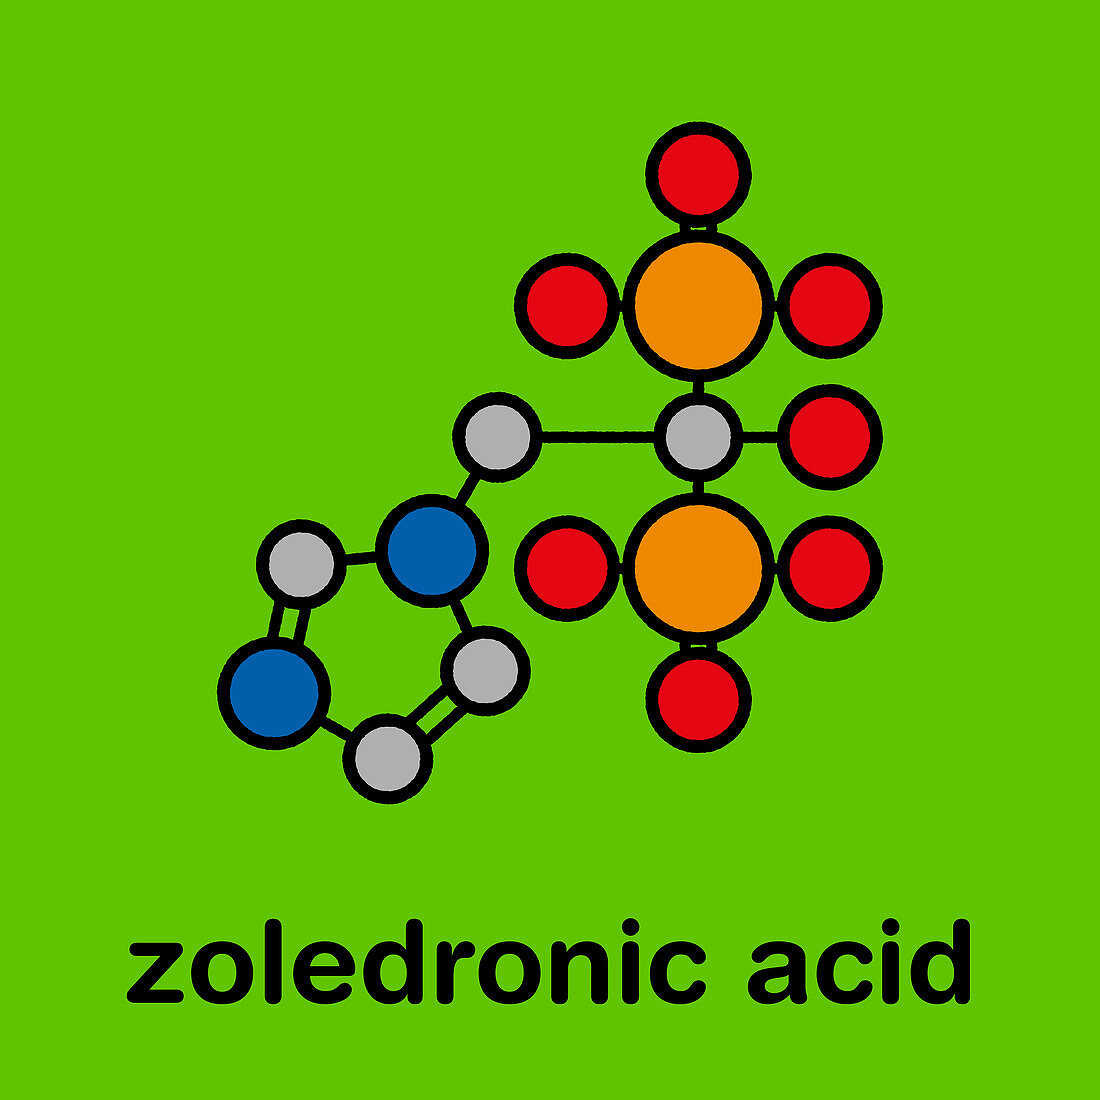 Zoledronic acid osteoporosis drug molecule, illustration